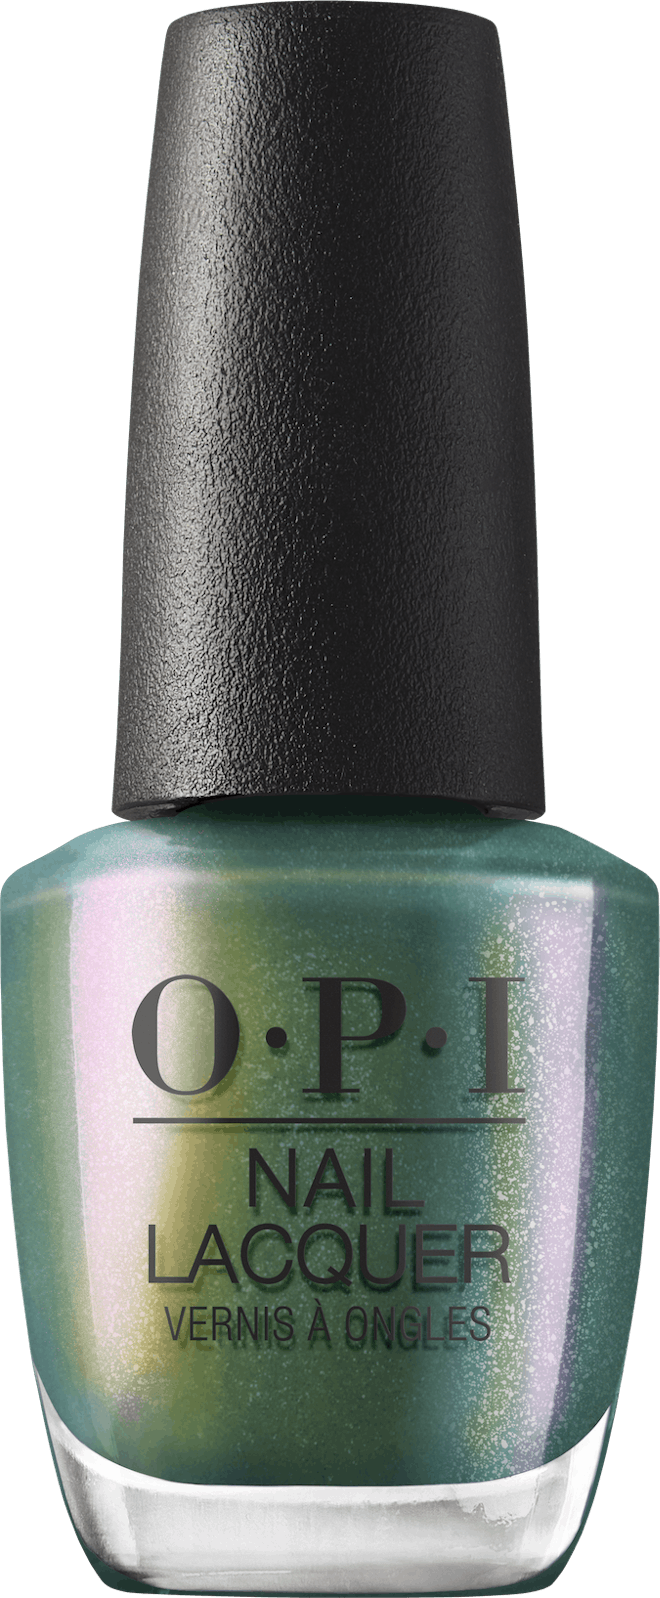 OPI Feelin’ Capricorn-y Nail Lacquer